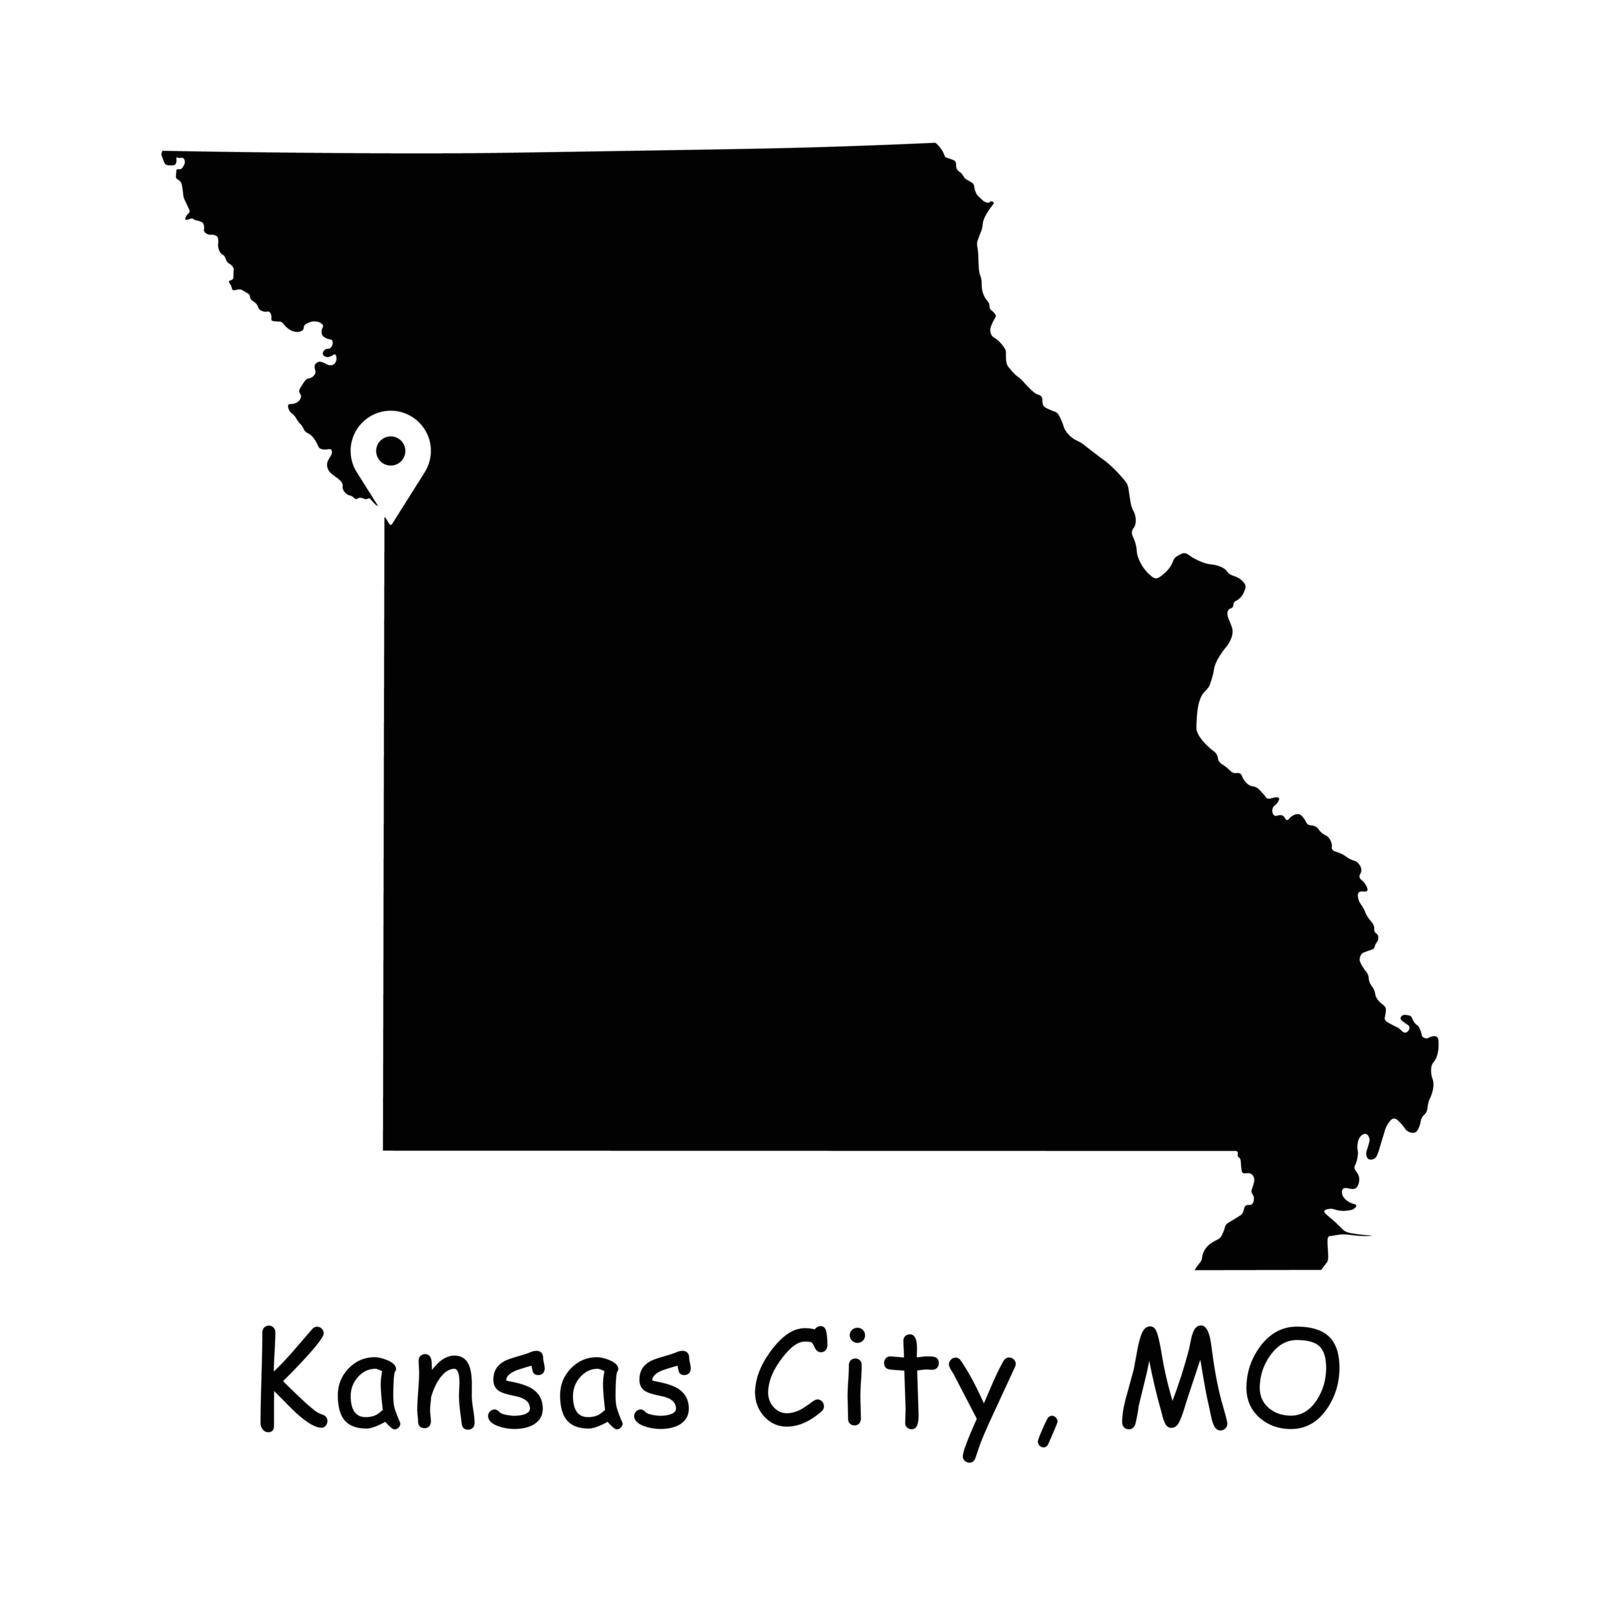 1307 Kansas City MO on Missouri State Map by xileodesigns